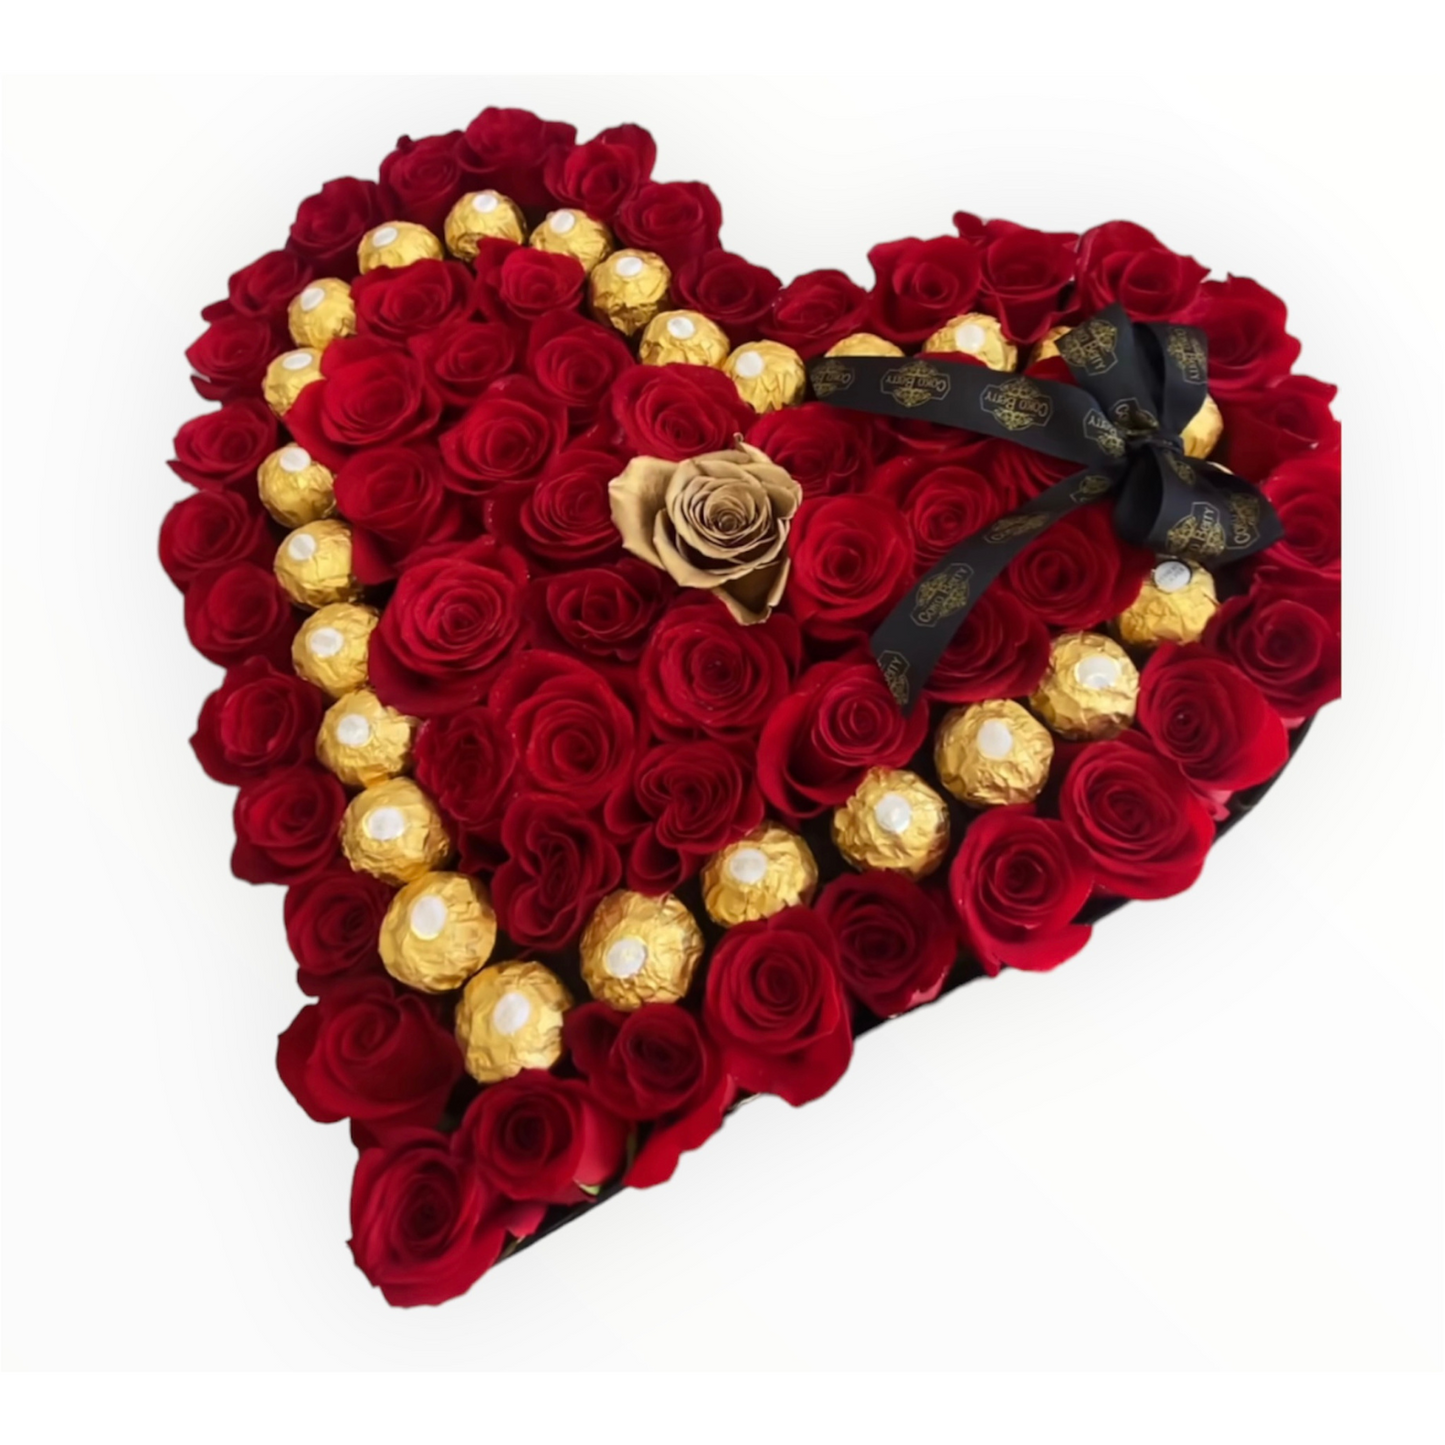 The Heart rose box 3D Ferrero